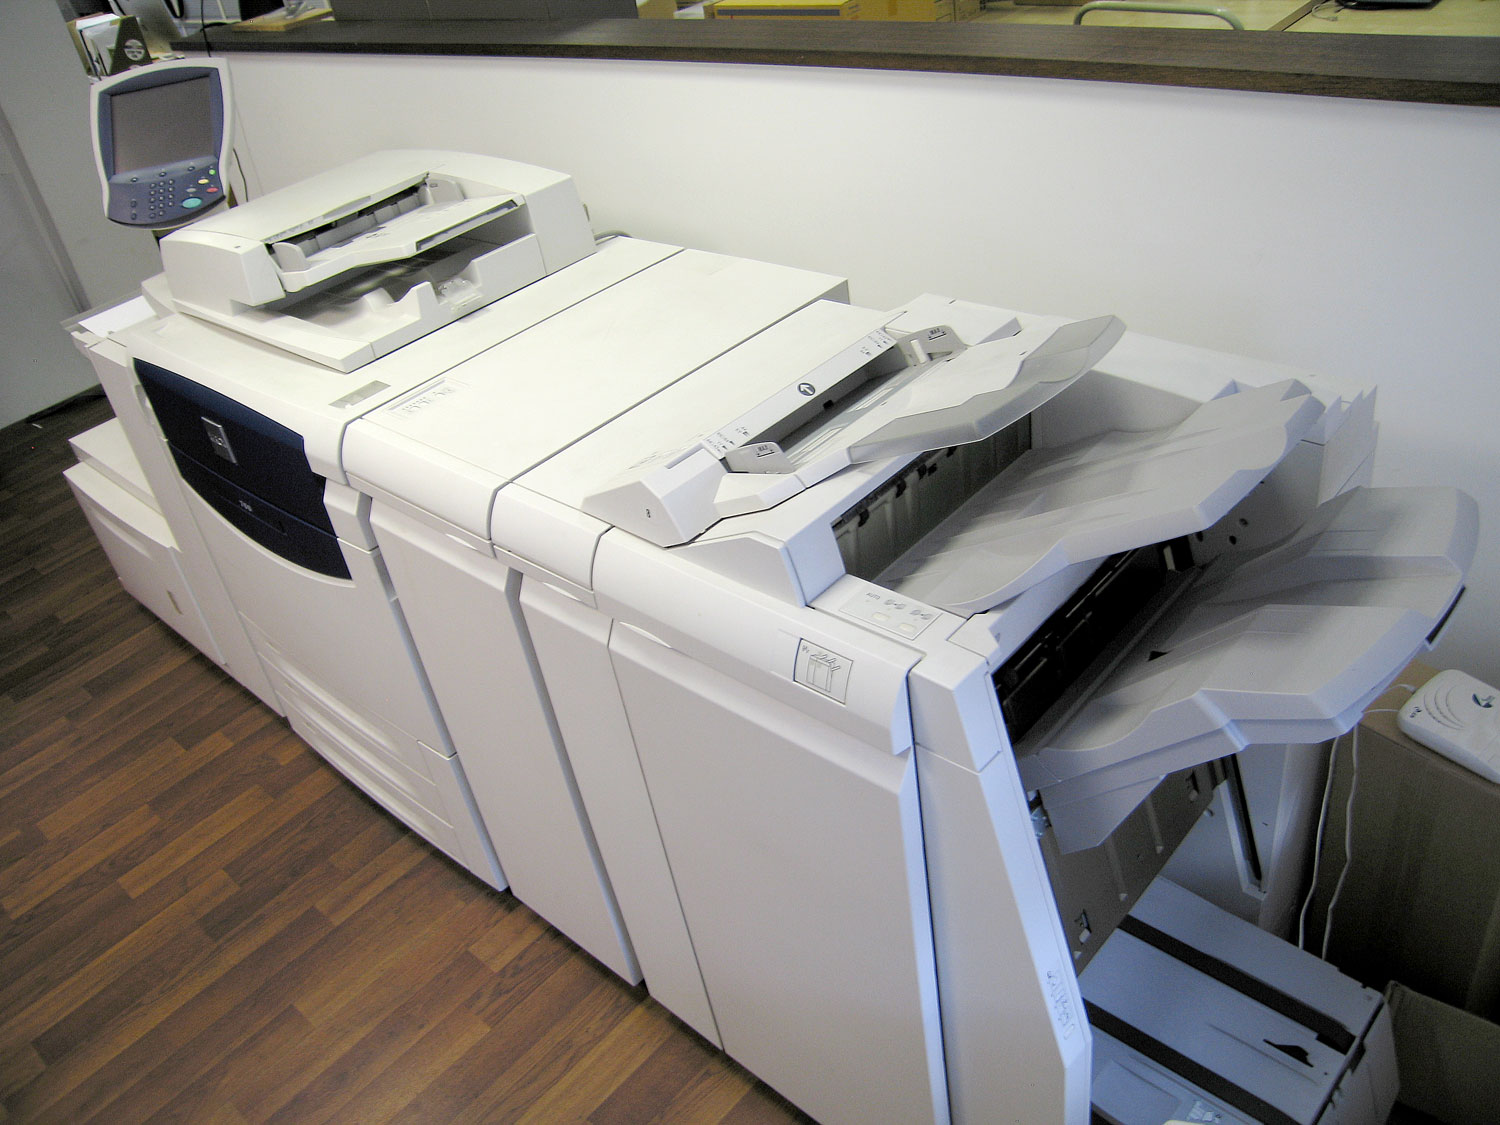 Xerox 700 printer